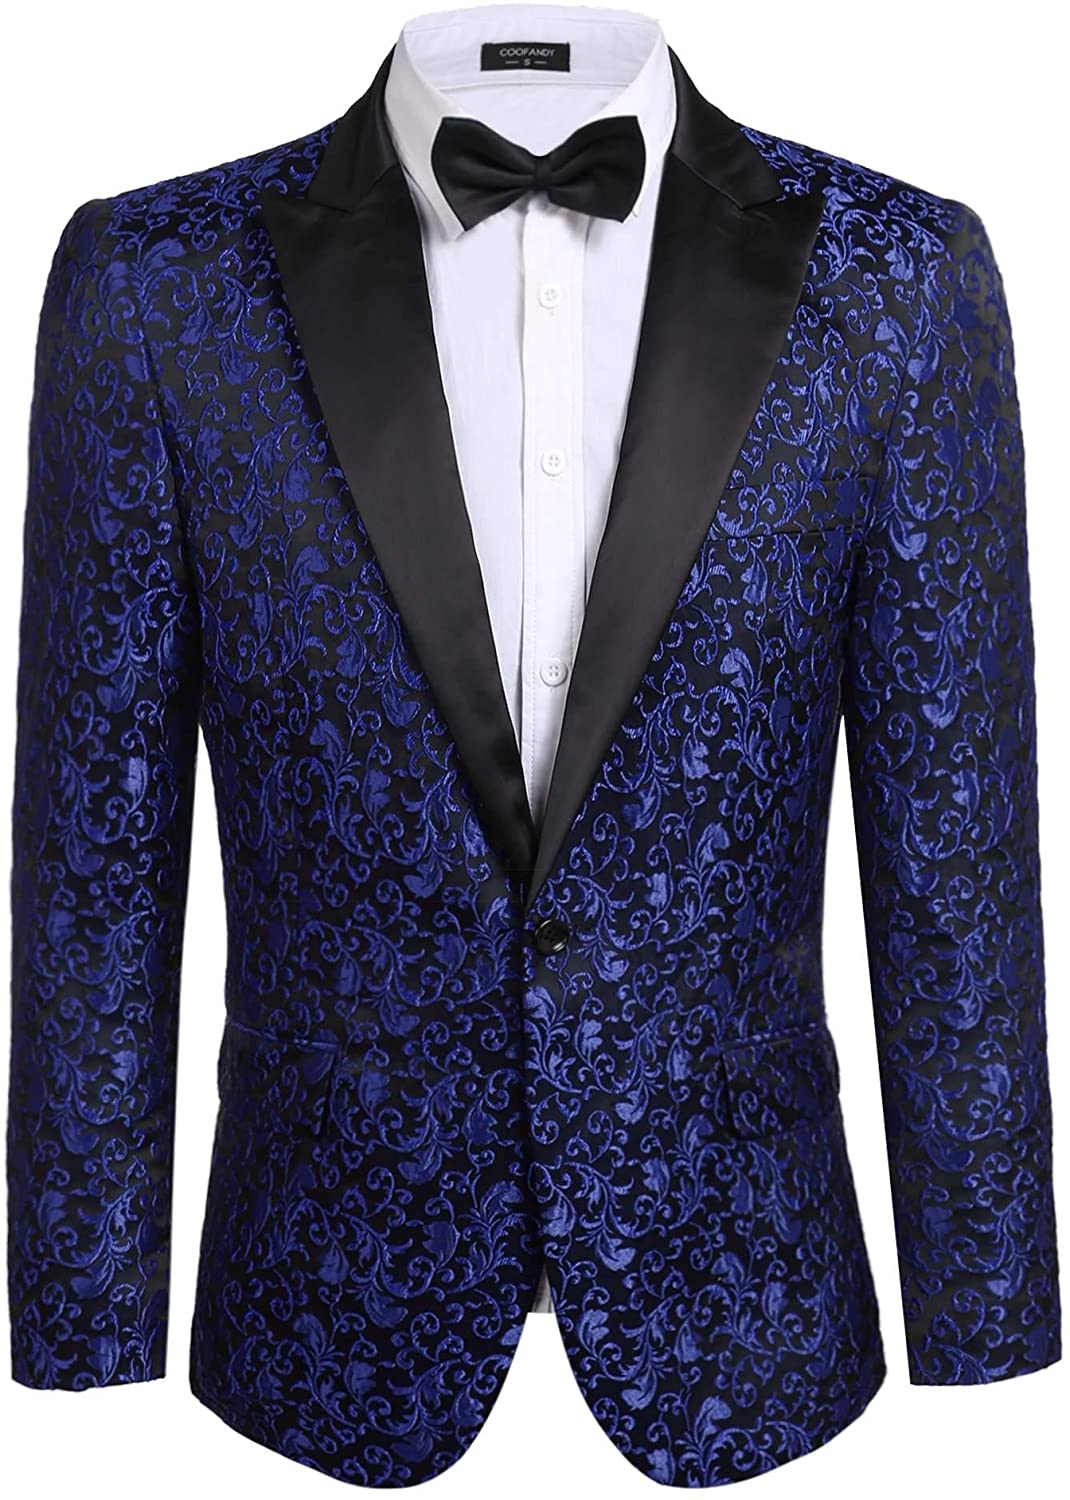 COOFANDY Men Floral Blazer Suit Jacket Dinner Party Prom Wedding ...